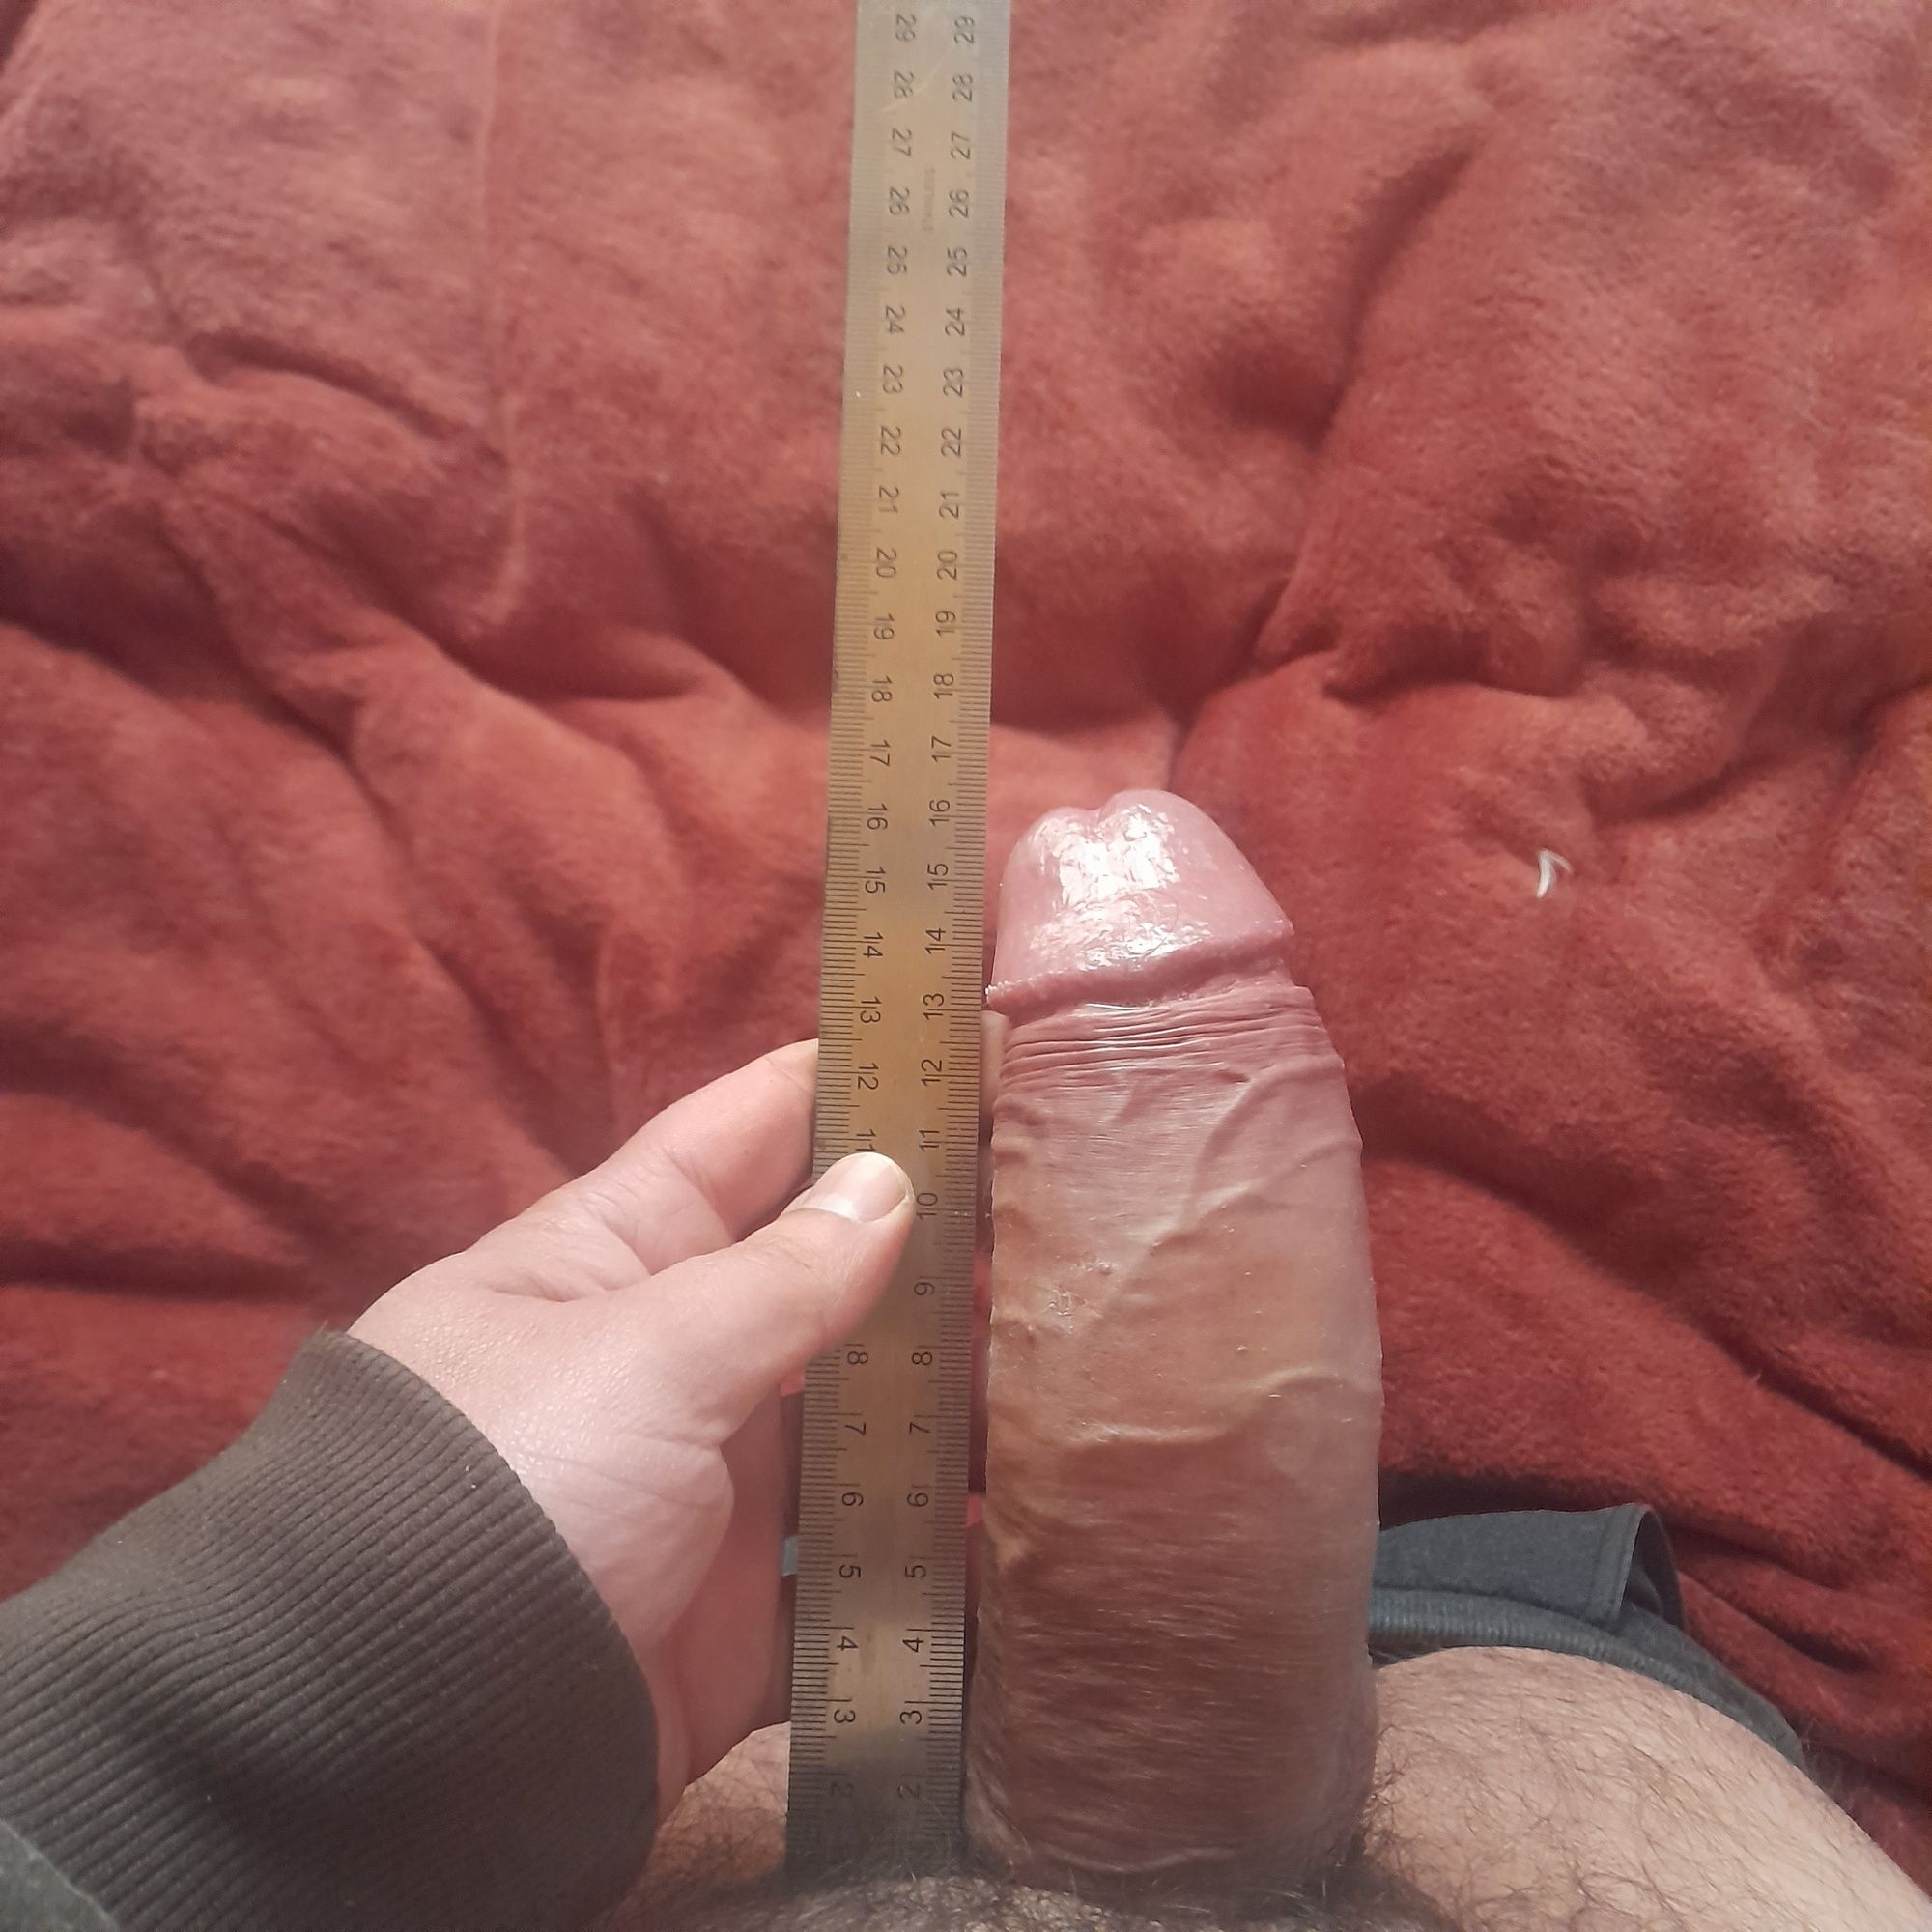 My dick size 